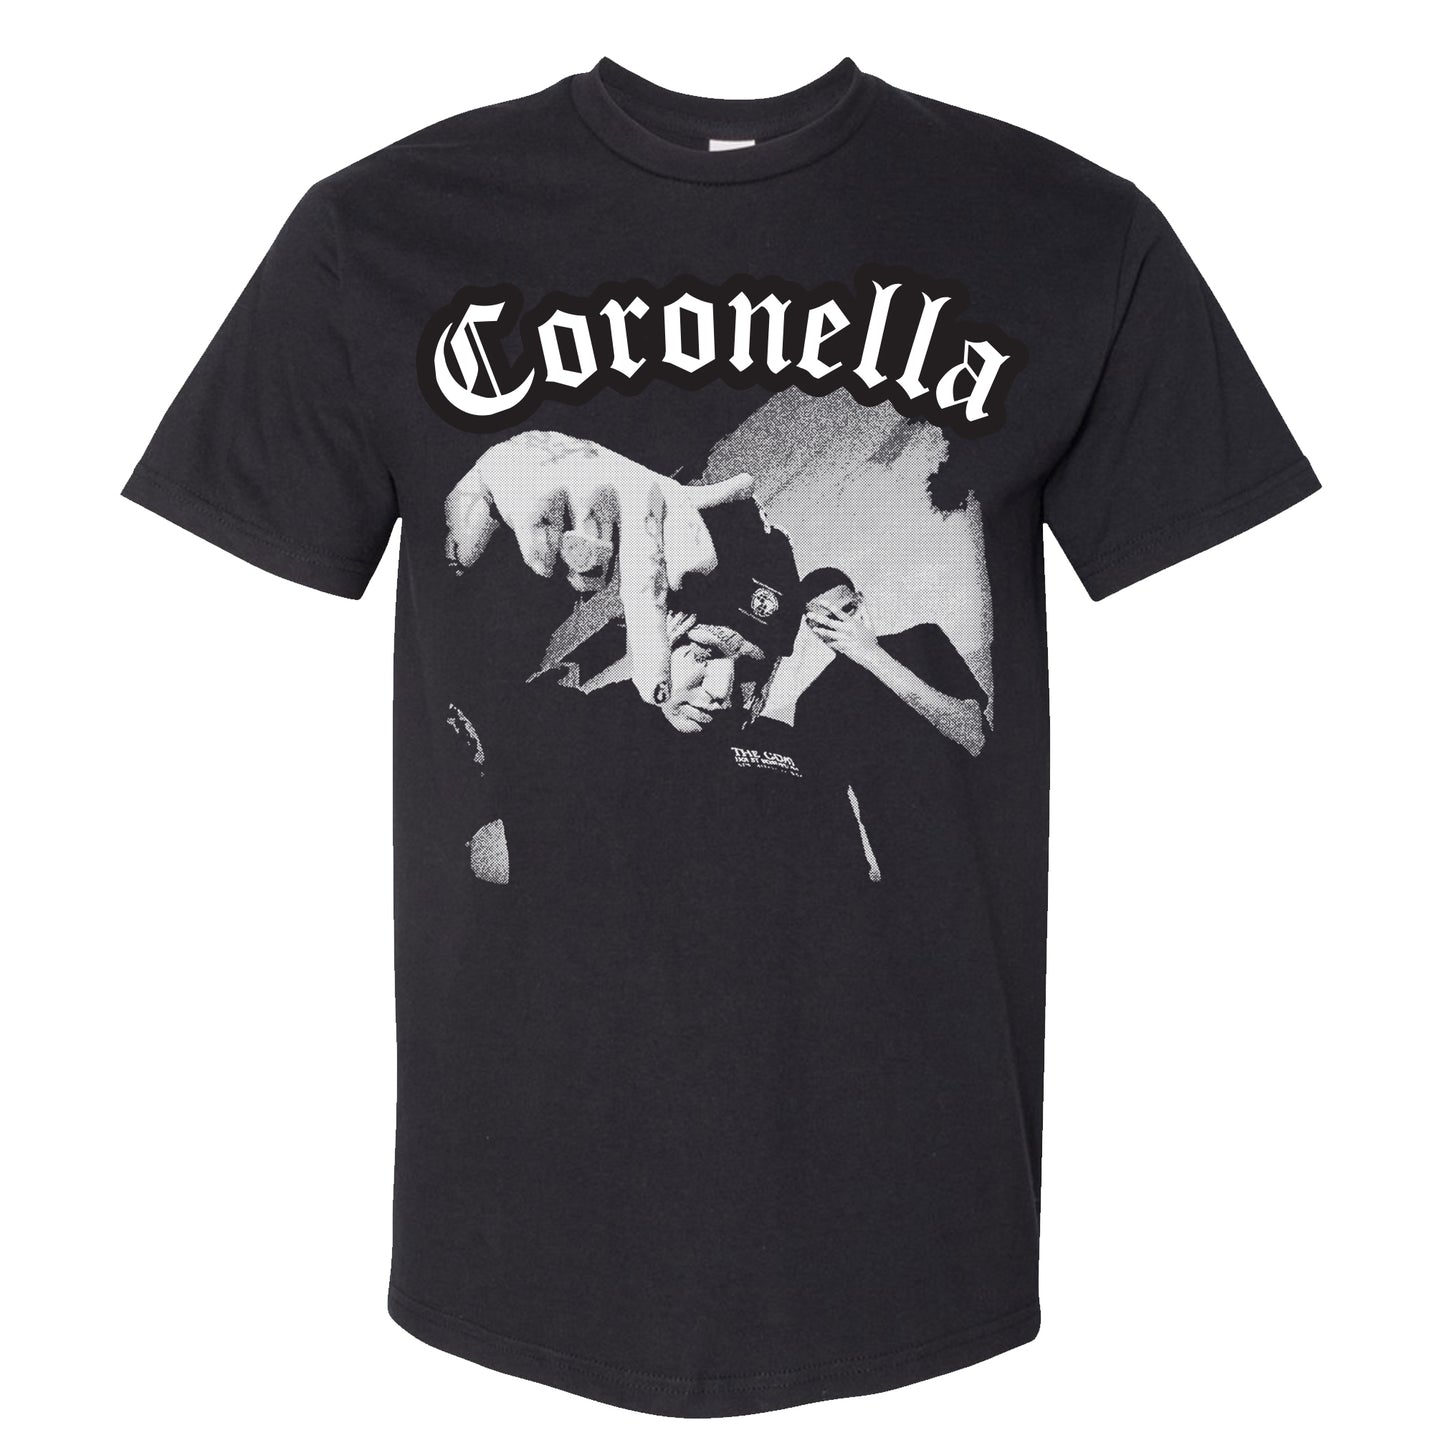 Coronella Alternate shirt